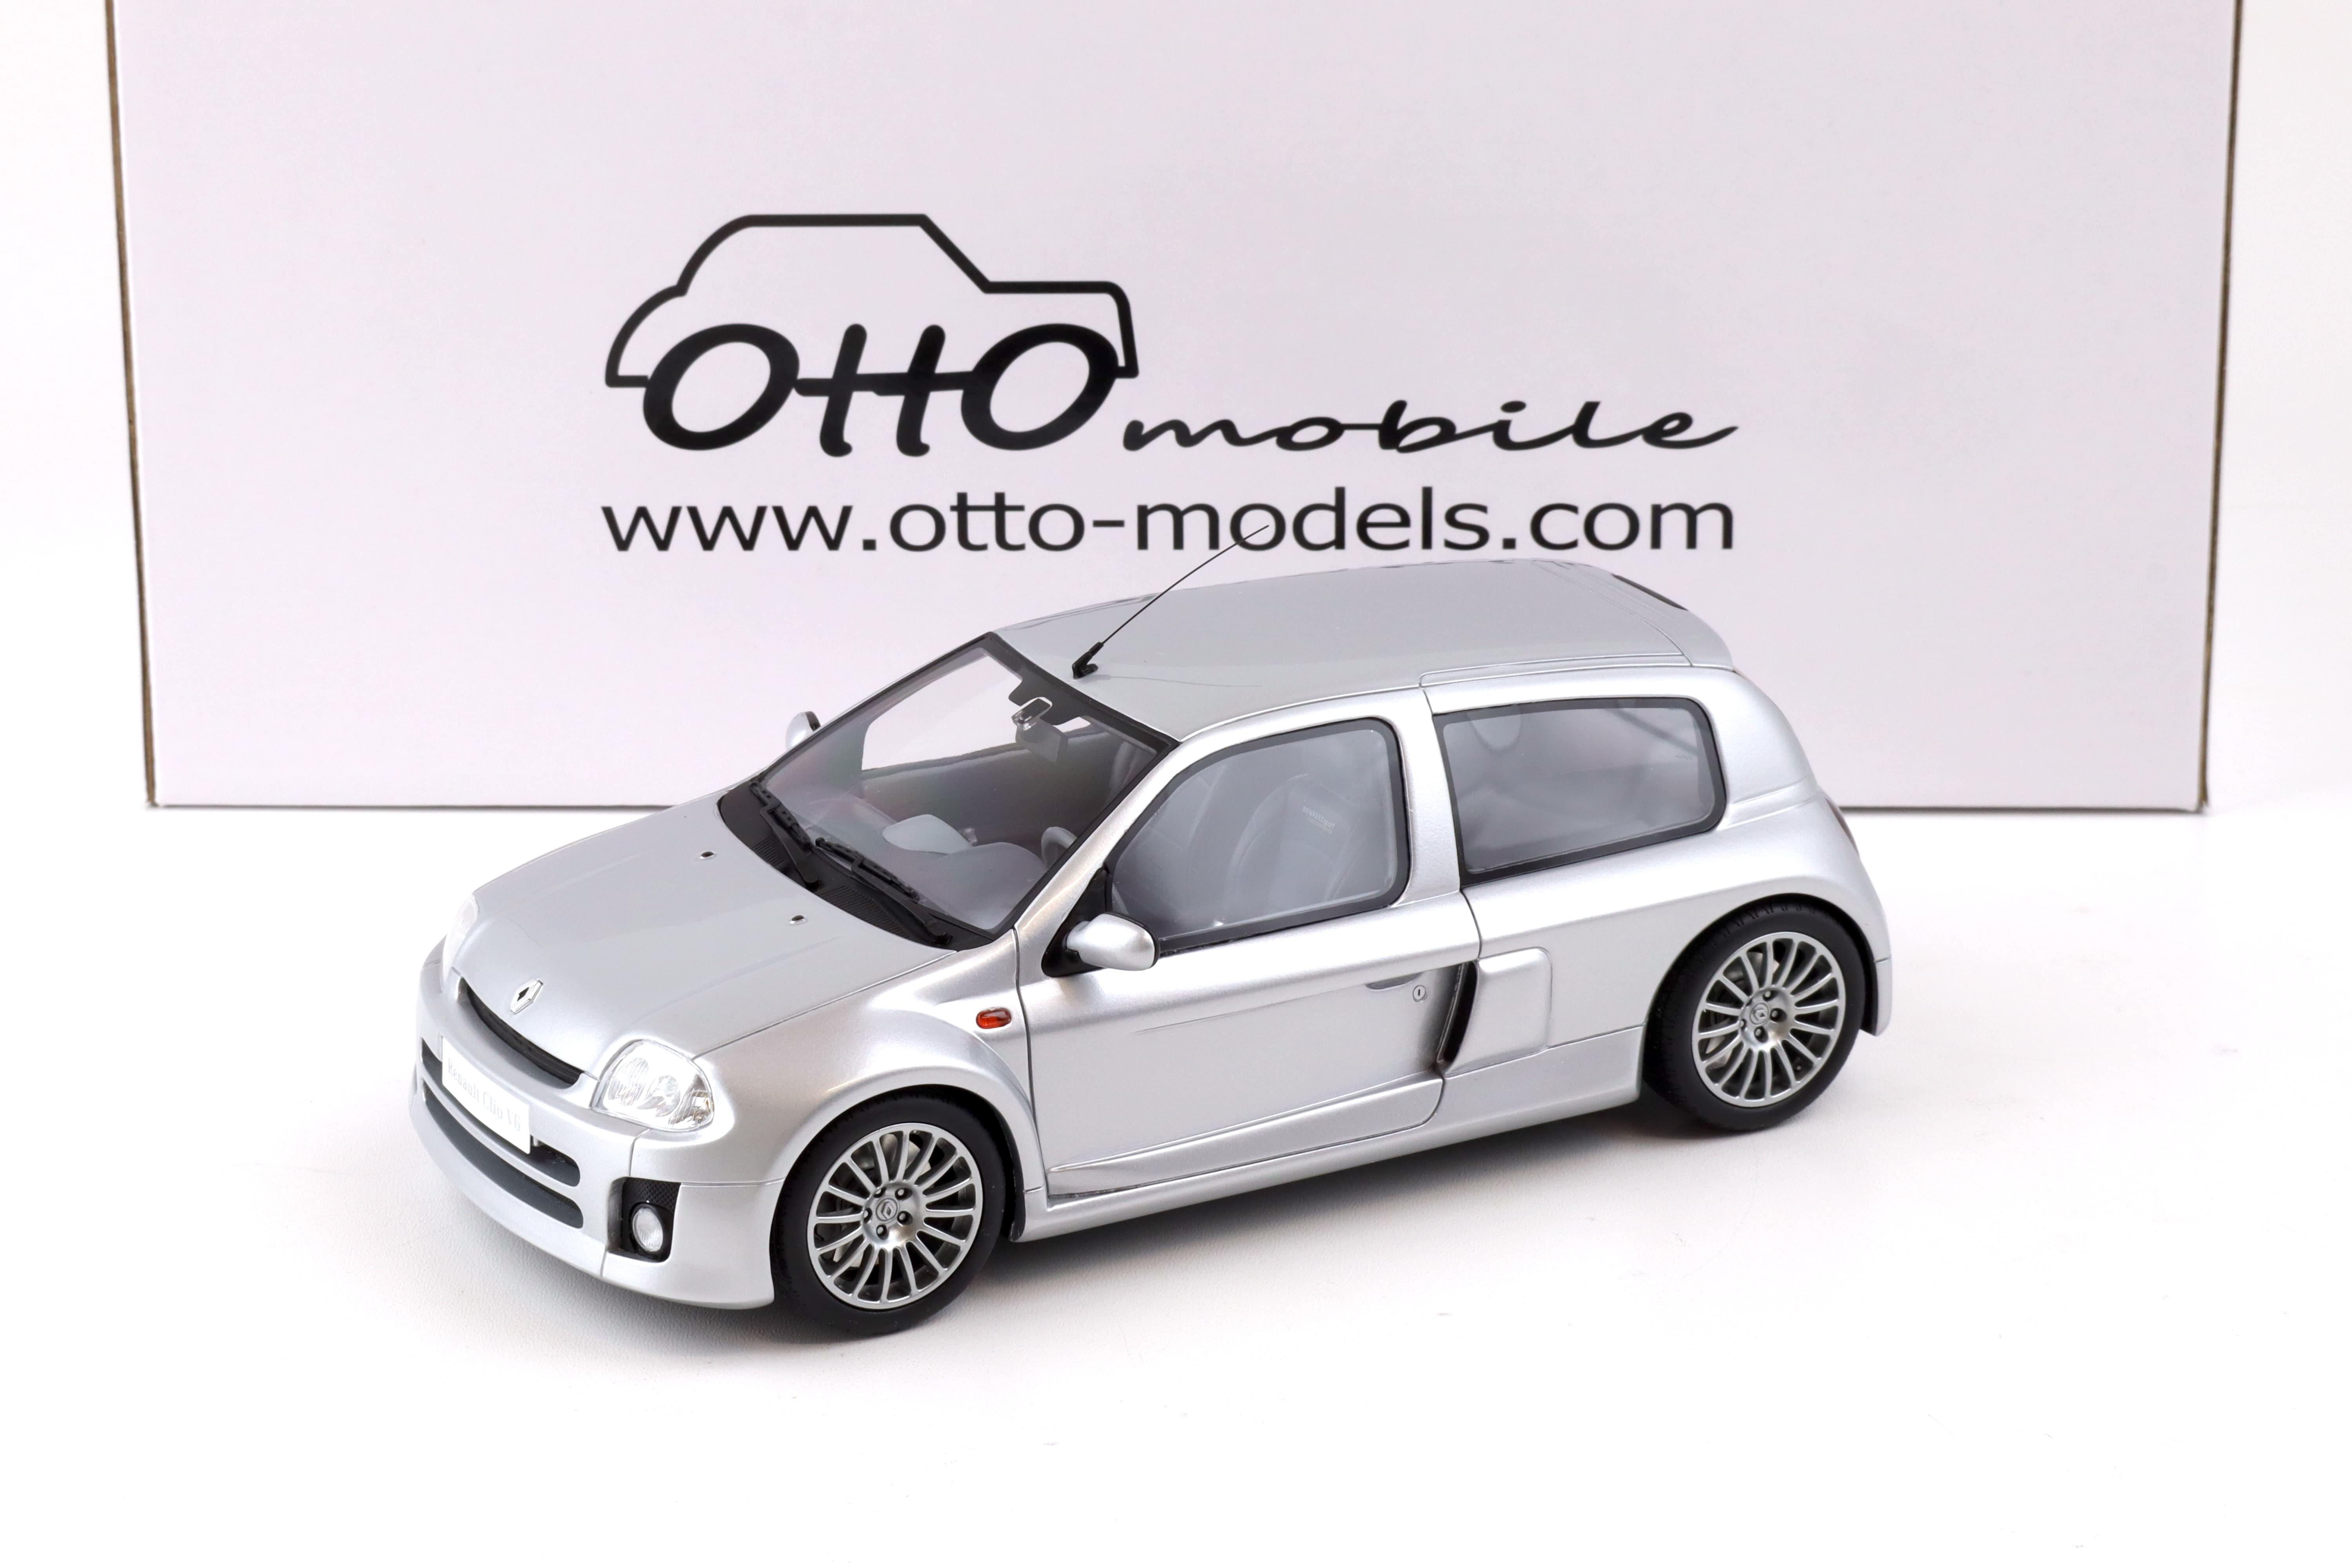 1:18 OTTO mobile OT1034 Renault Clio V6 Phase 1 silver 2001